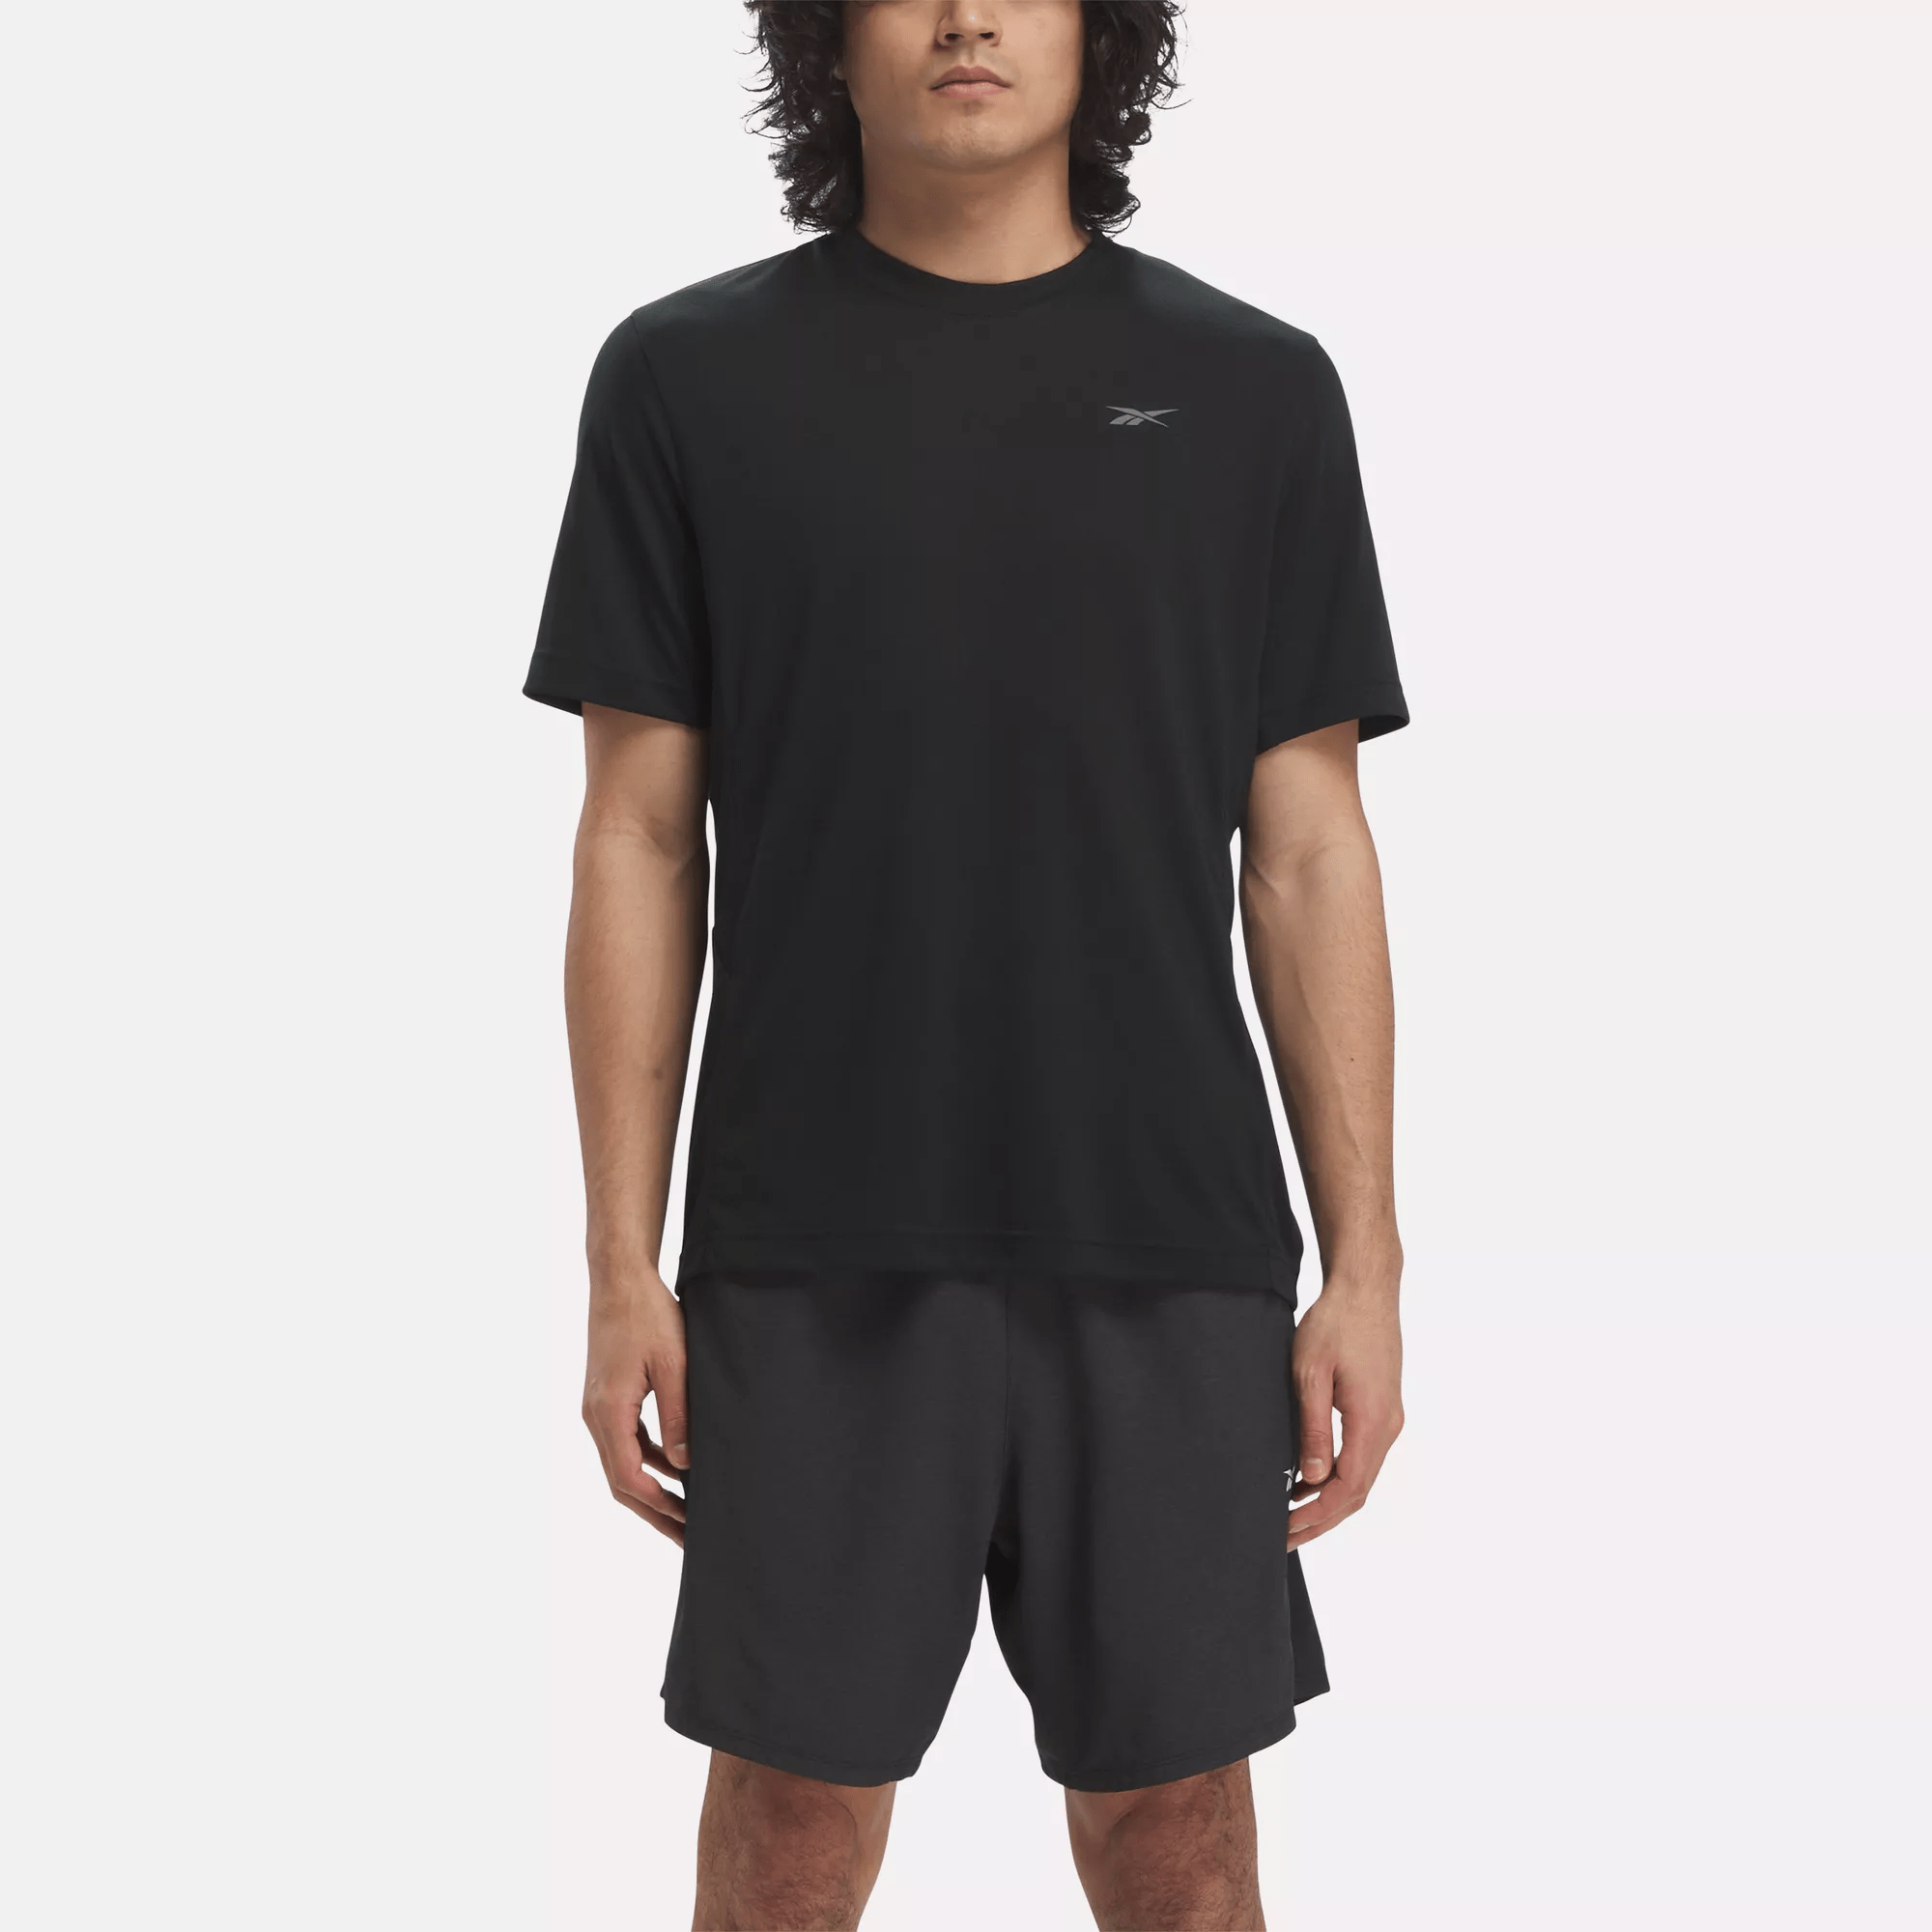 Reebok Strength Athlete T-shirt In Black